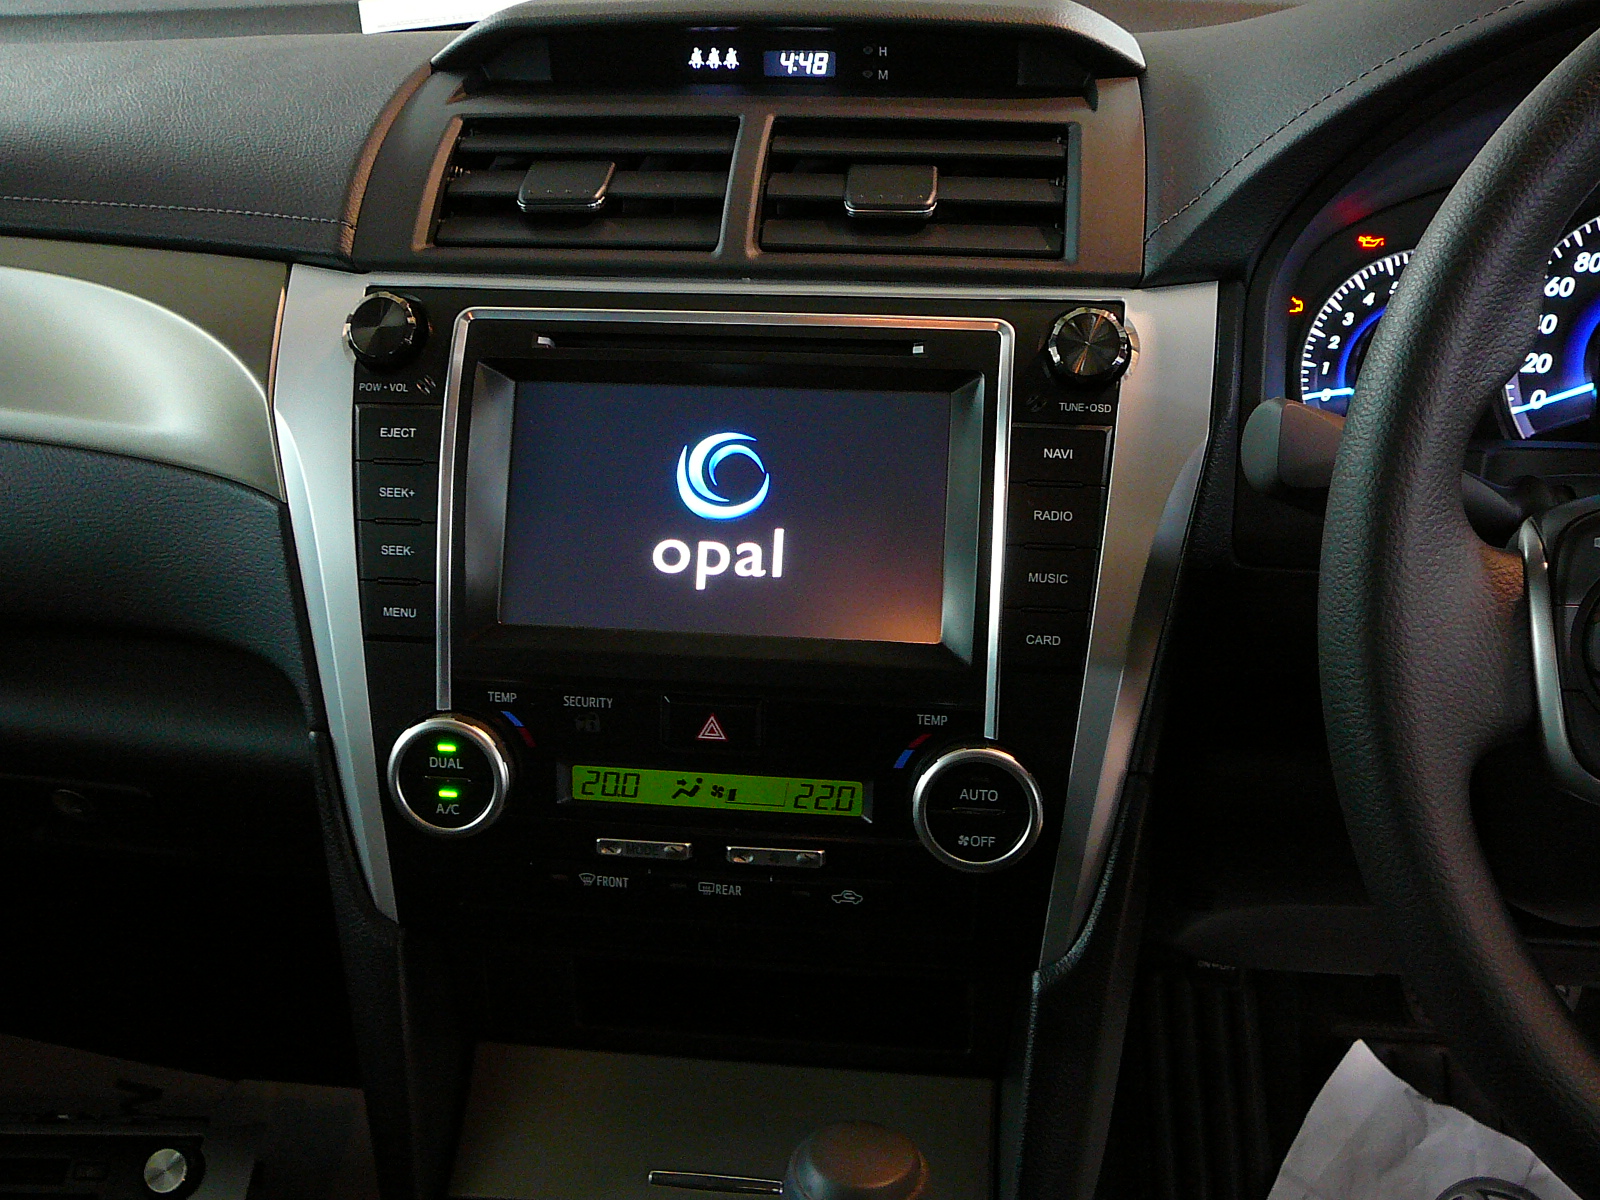 Toyota Aurion, Opal Touch Screen GPS Navigation Solution